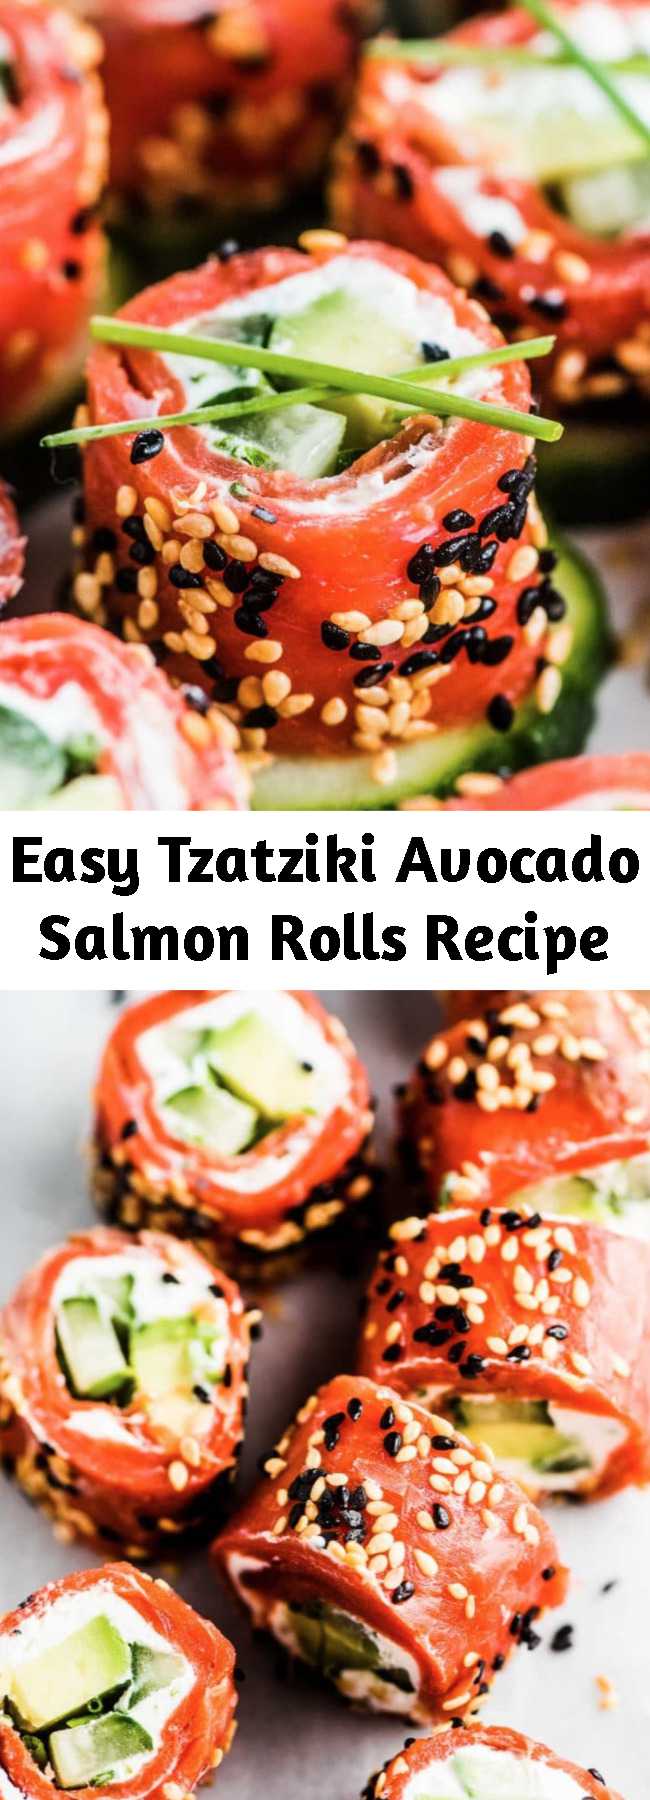 Easy Tzatziki Avocado Salmon Rolls Recipe - Tzatziki Avocado Salmon Rolls are the perfect party appetizer. They're totally delicious, easy to make, super pretty, and healthy. Bonus: they can be made ahead of time! #salmon #tzatziki #appetizer #seafood #fish #smokedsalmon #glutenfree #keto #lowcarb #holidayappetizer #partyappetizer #healthyrecipes #cucumber #cucumberbites #salmonroll